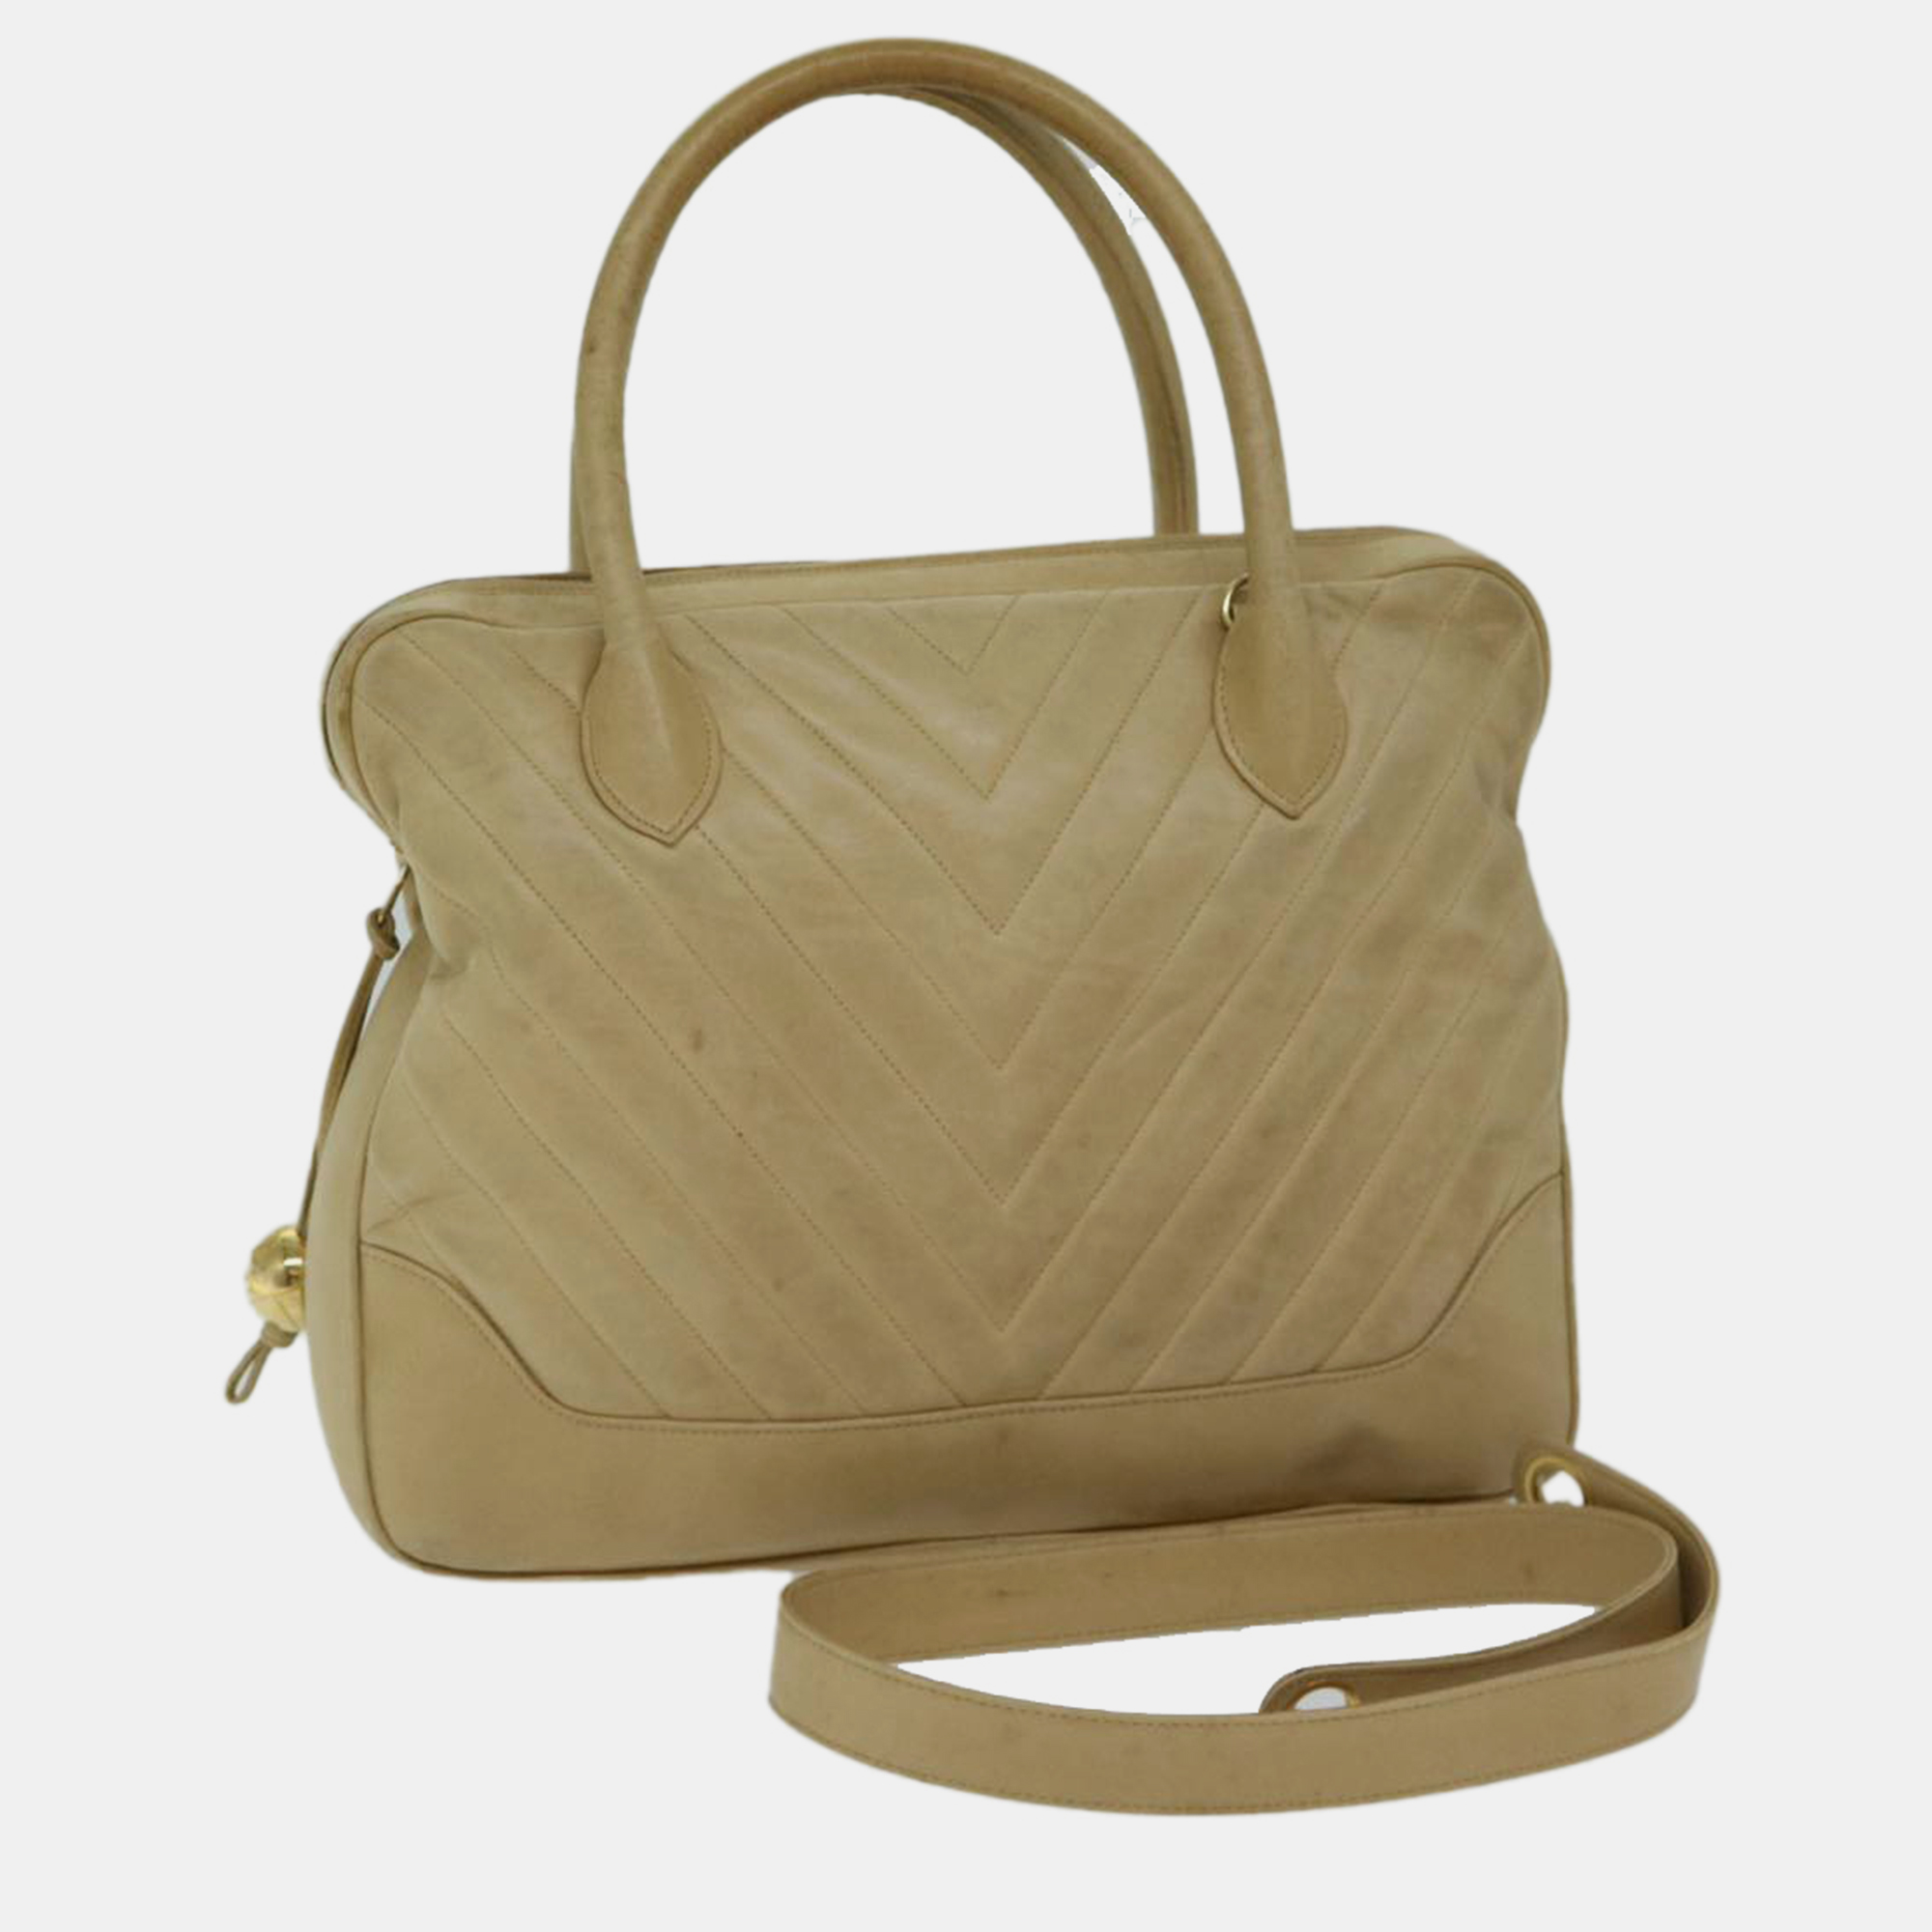 Chanel beige leather chevron handbag